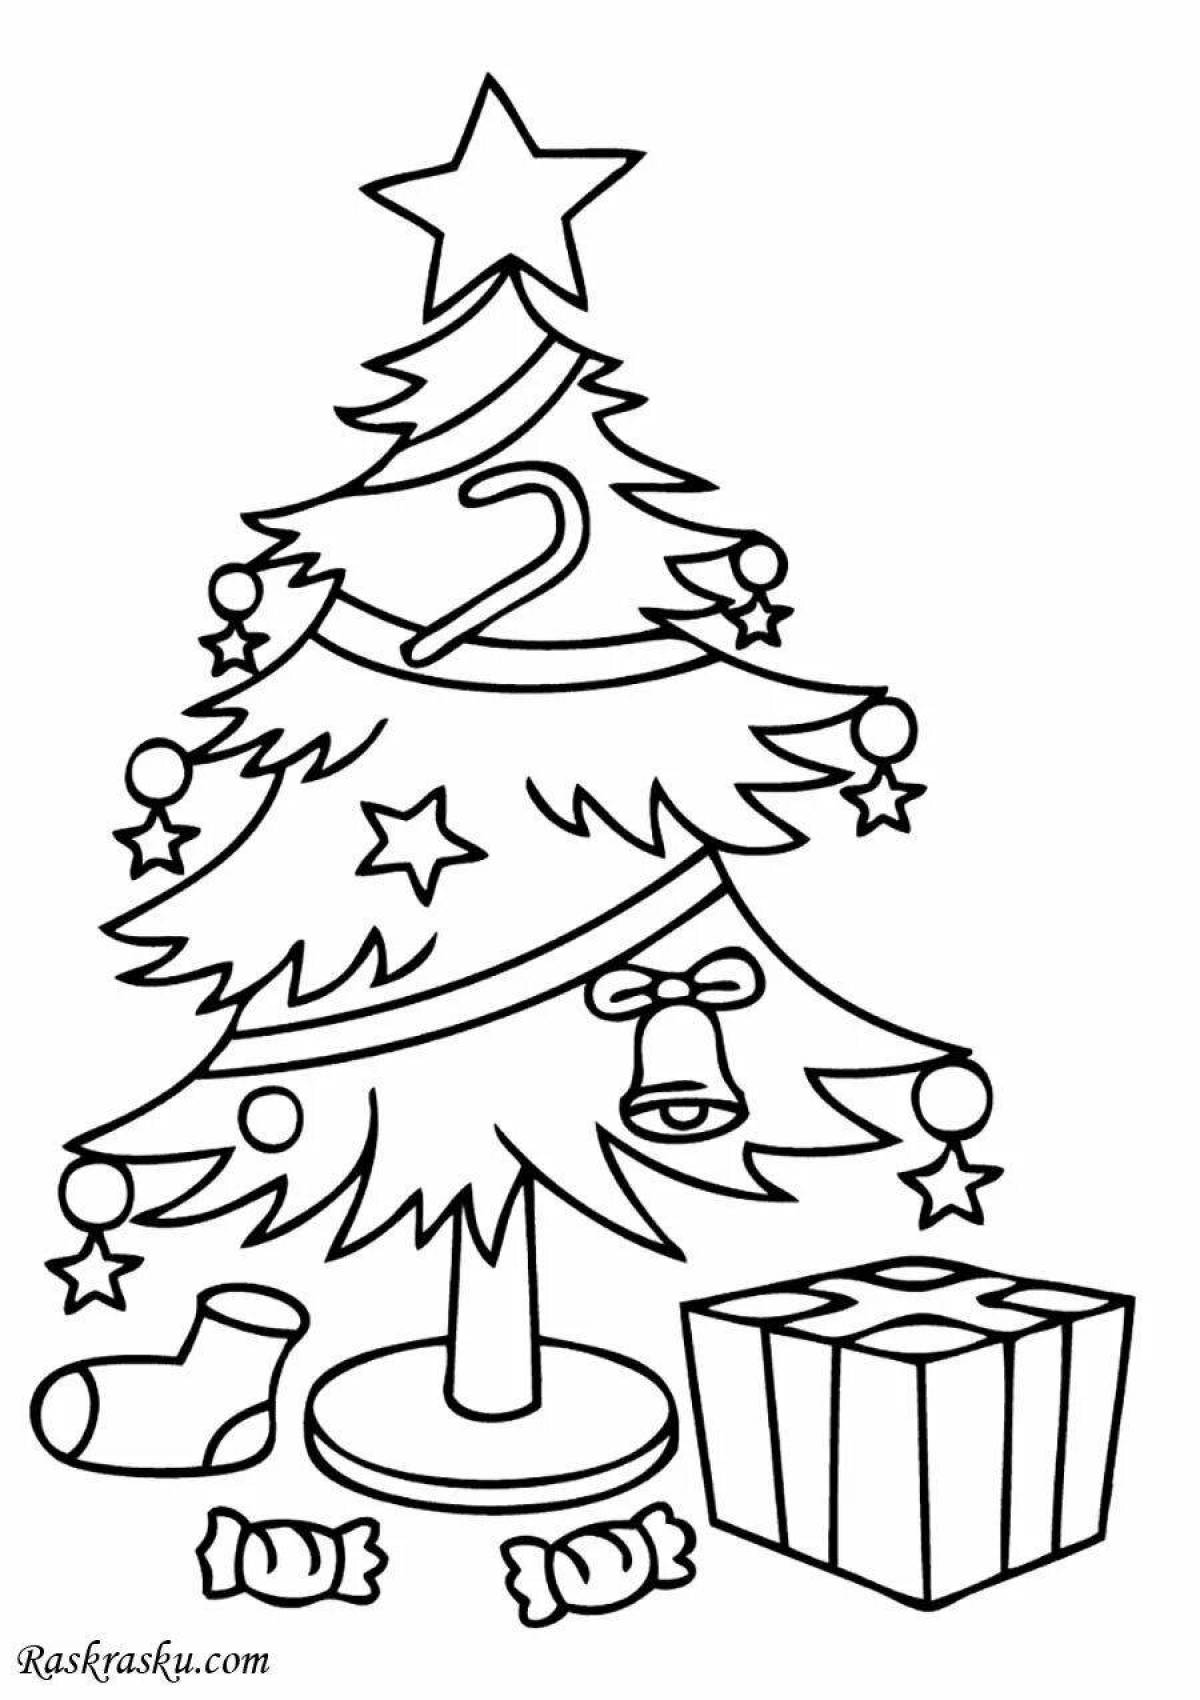 Luminous Christmas tree coloring book for kids